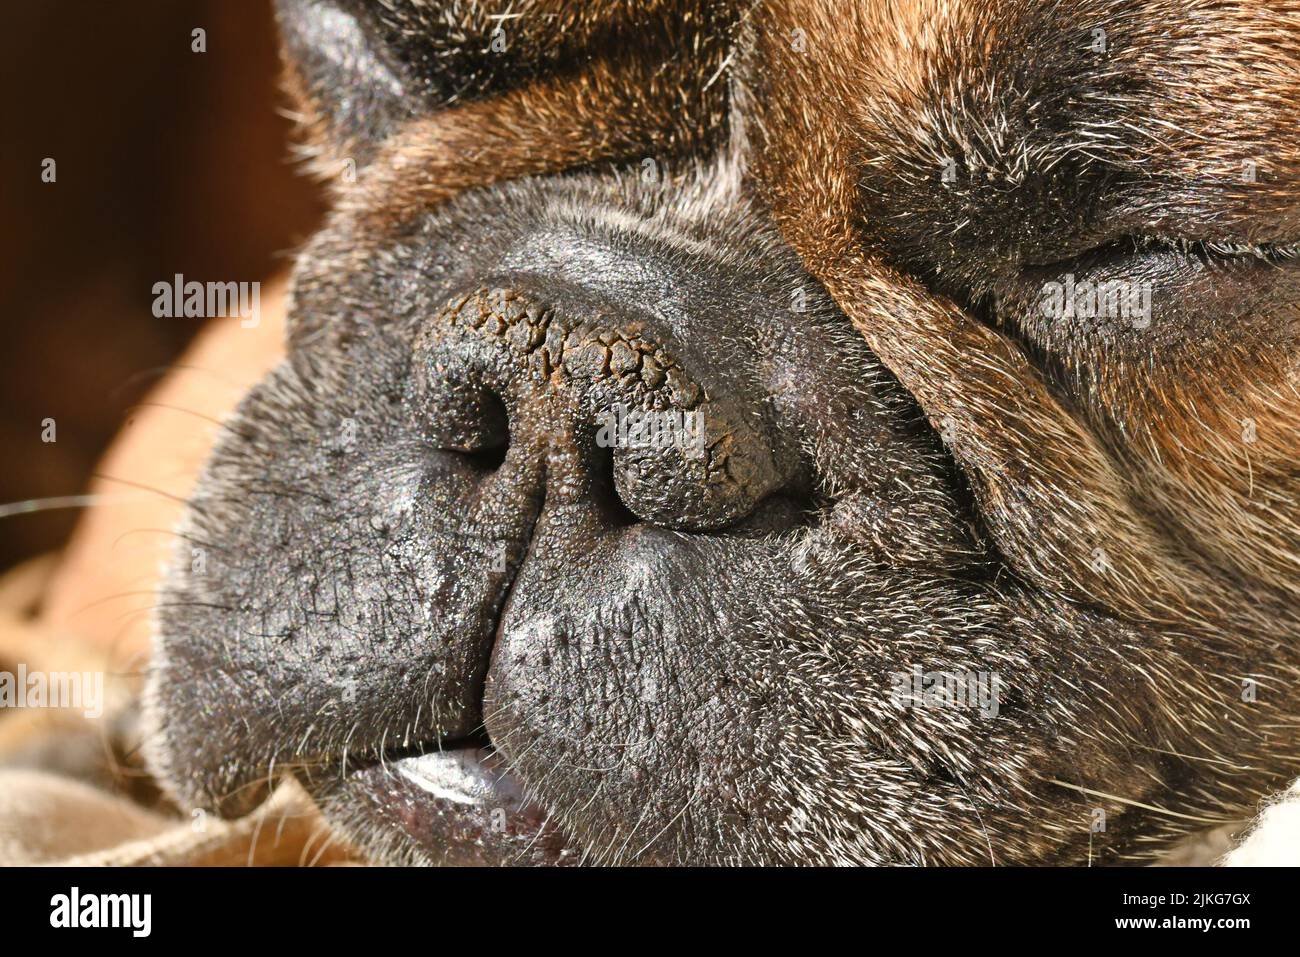 Dry brachycephalic dog nose with narrow nostrils of a French Bulldog Stock Photo